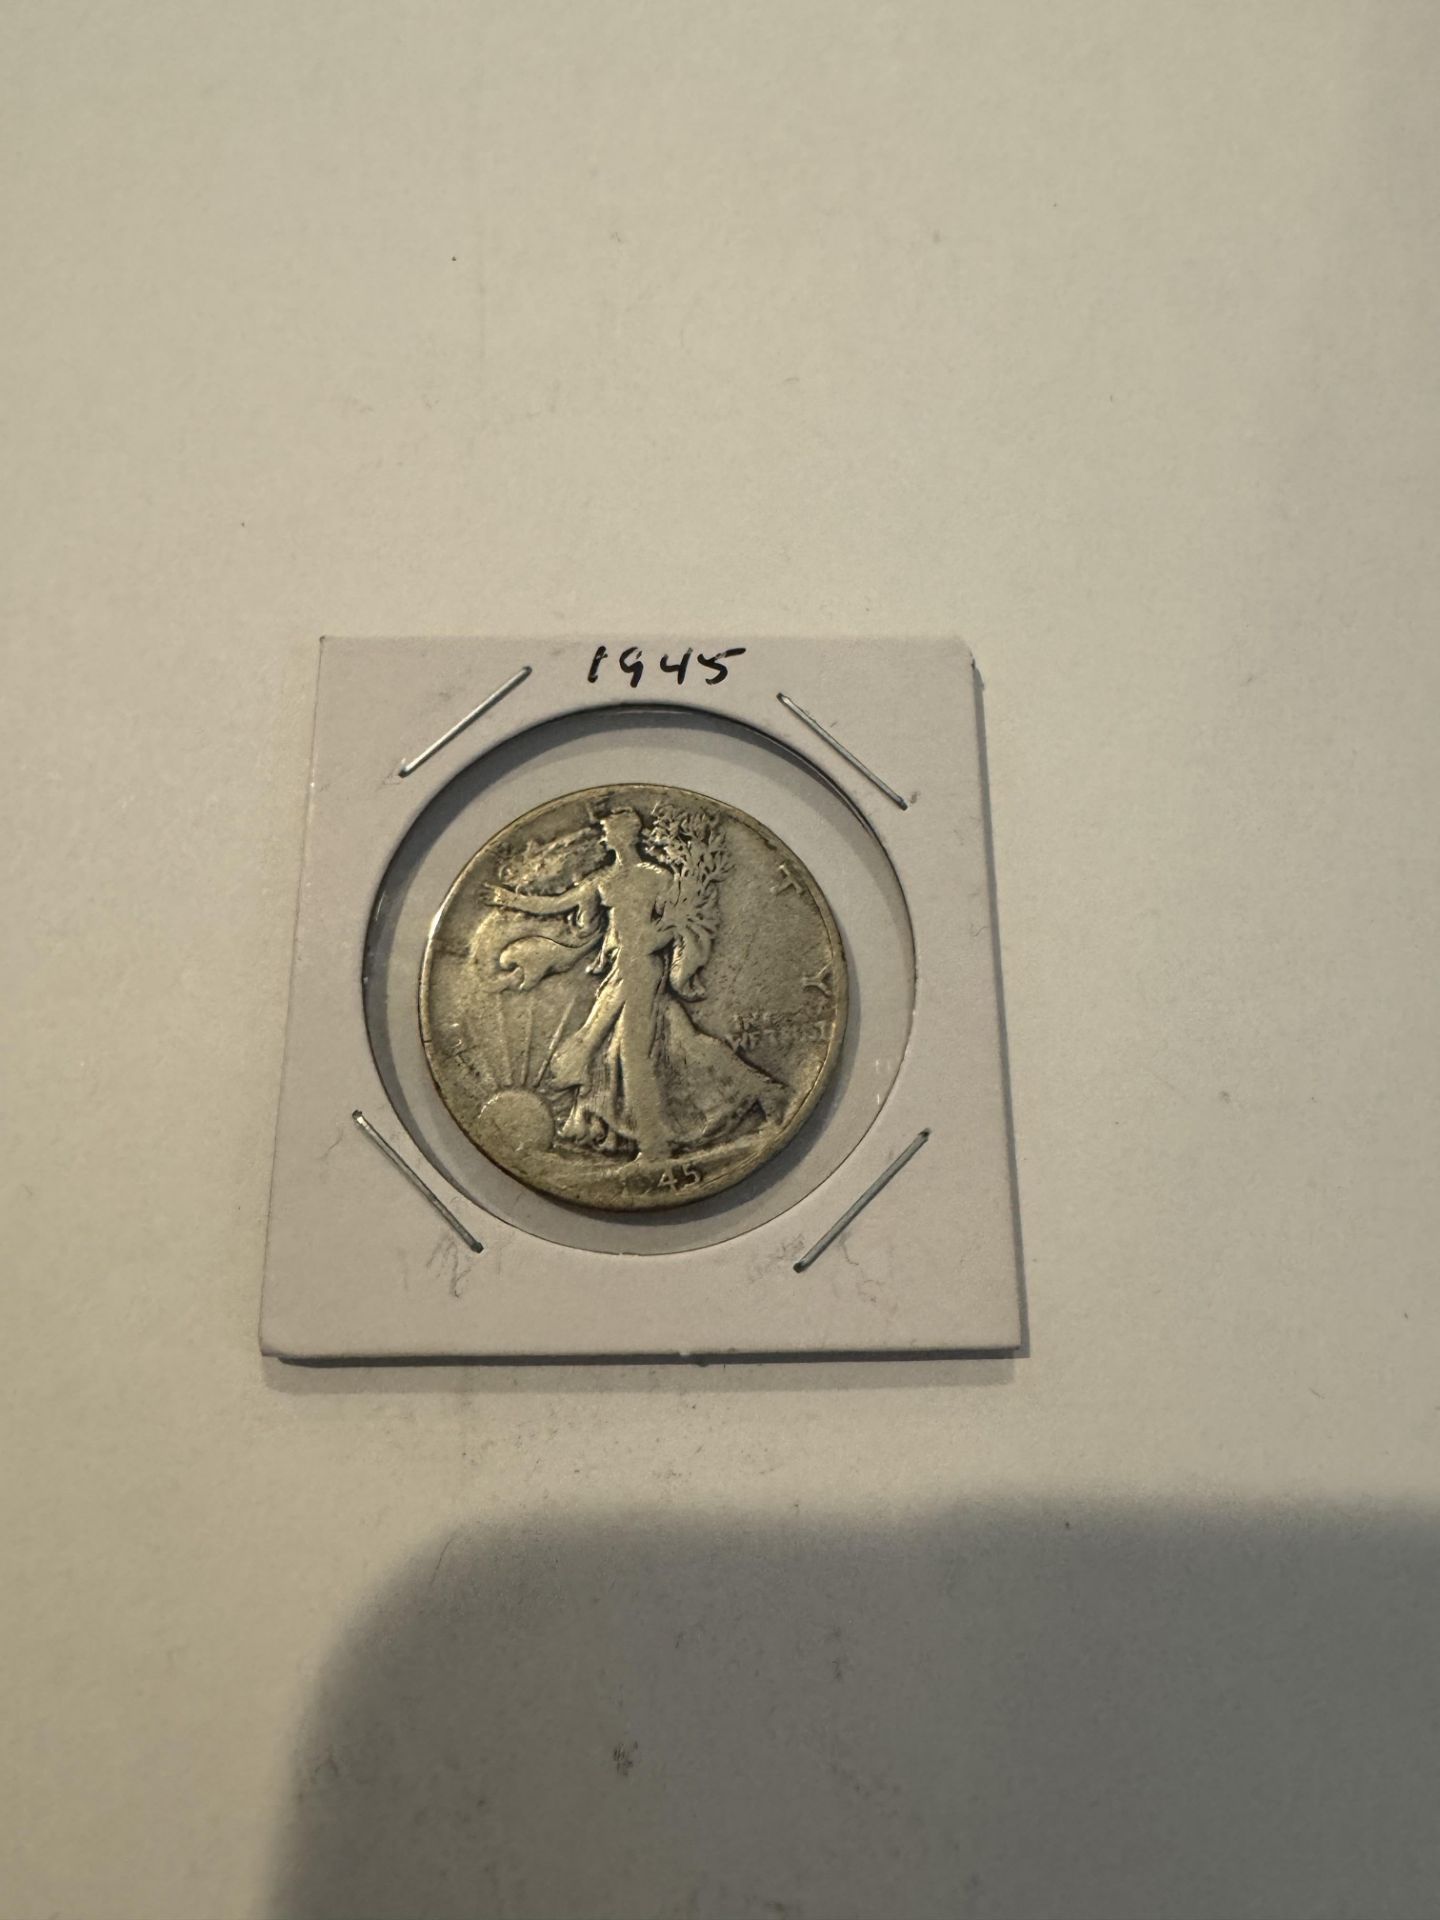 US Half-dollar silver coin 1945